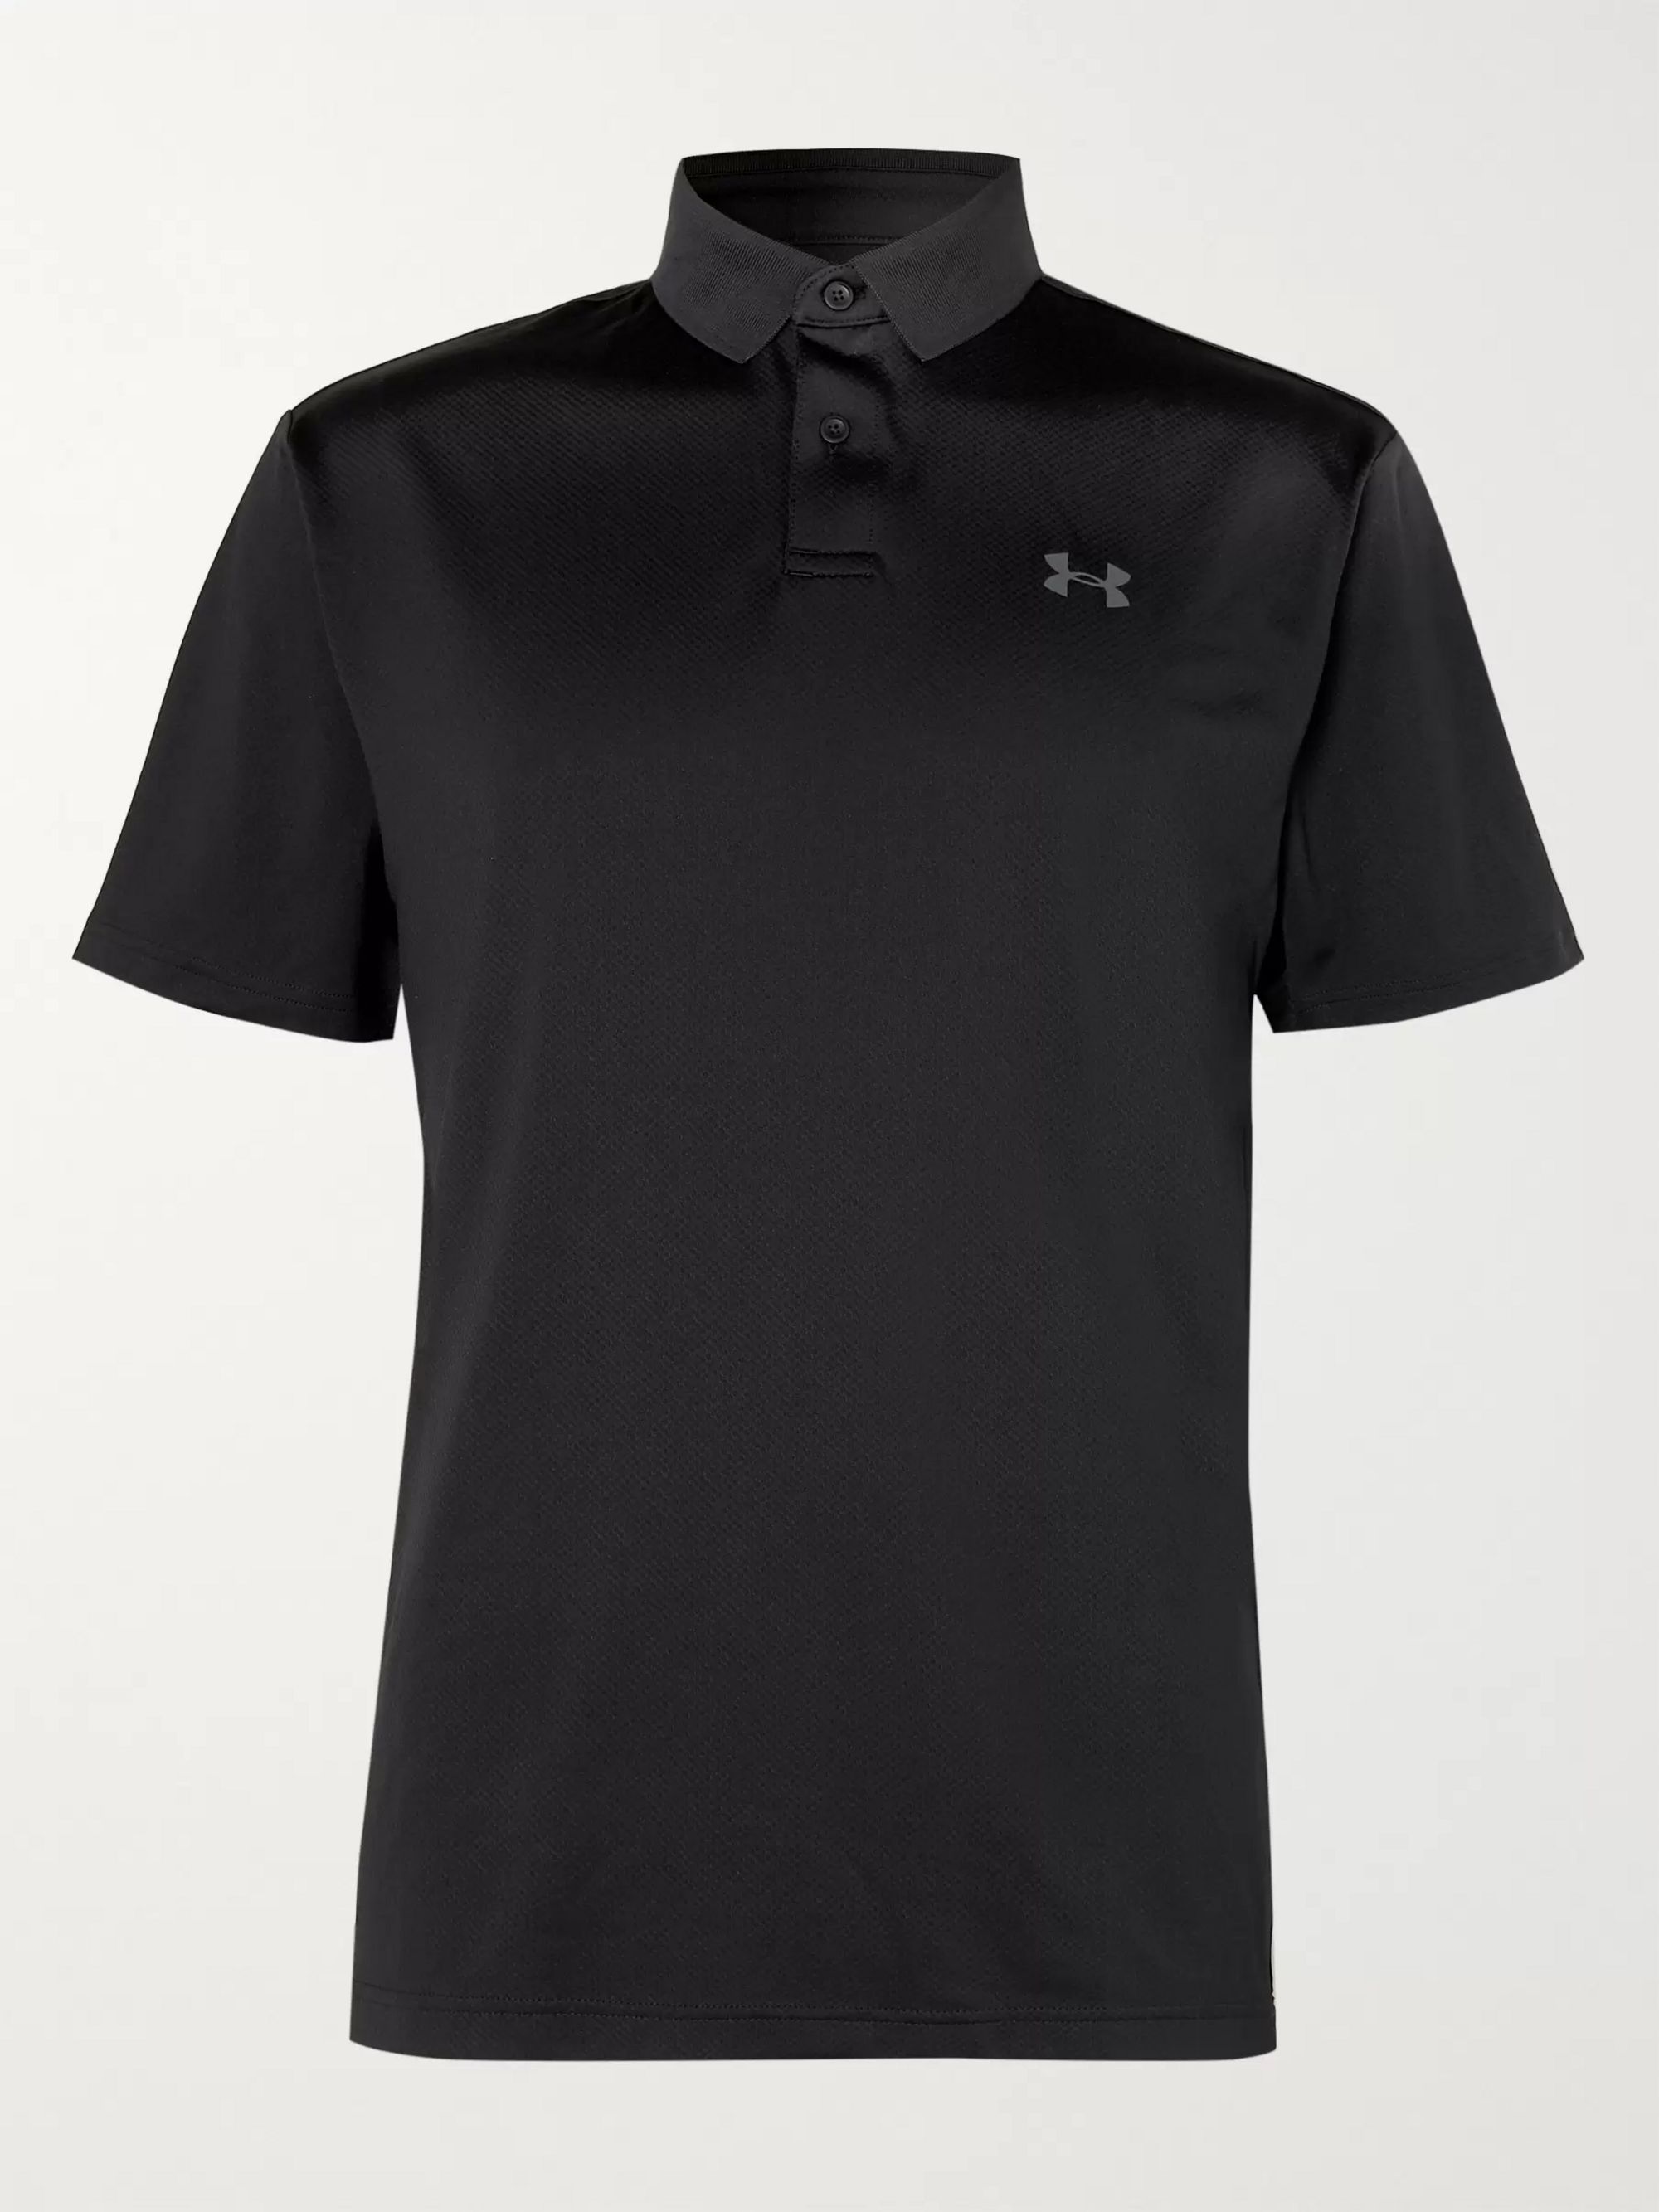 Golf Polo Shirt | Under Armour | MR PORTER